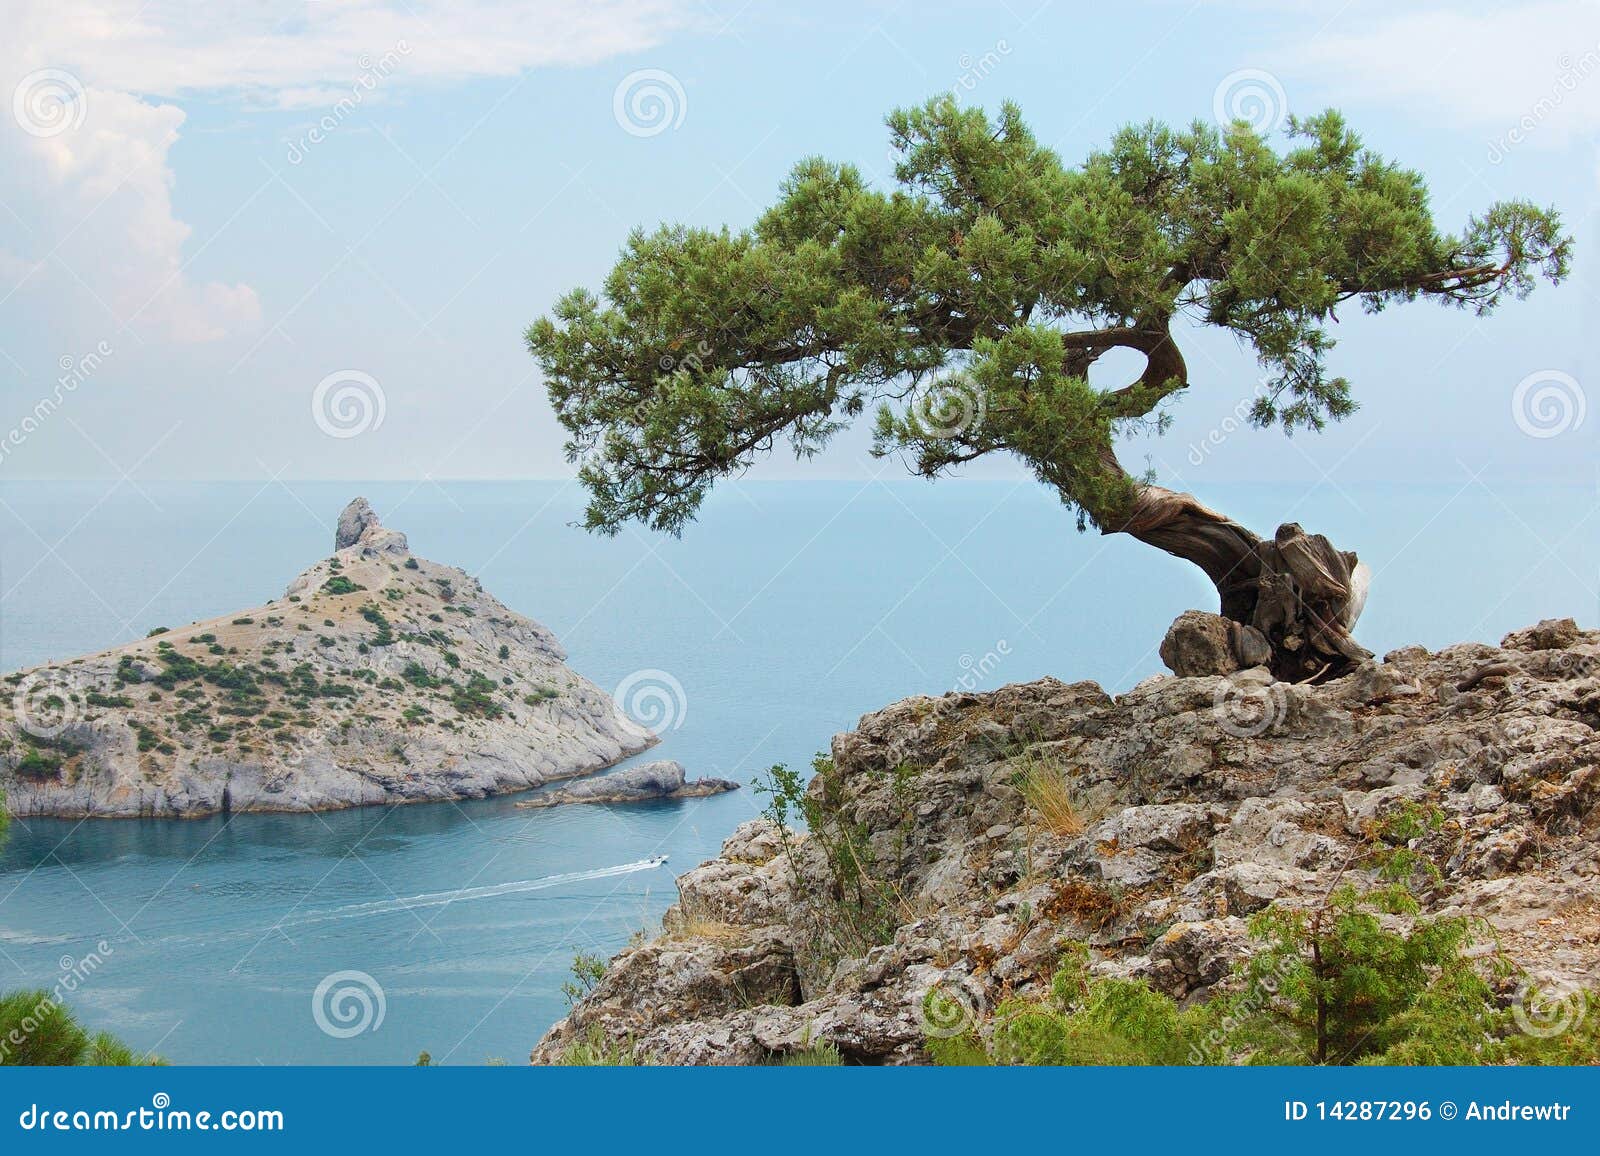 single pine tree, ukraine, crimea